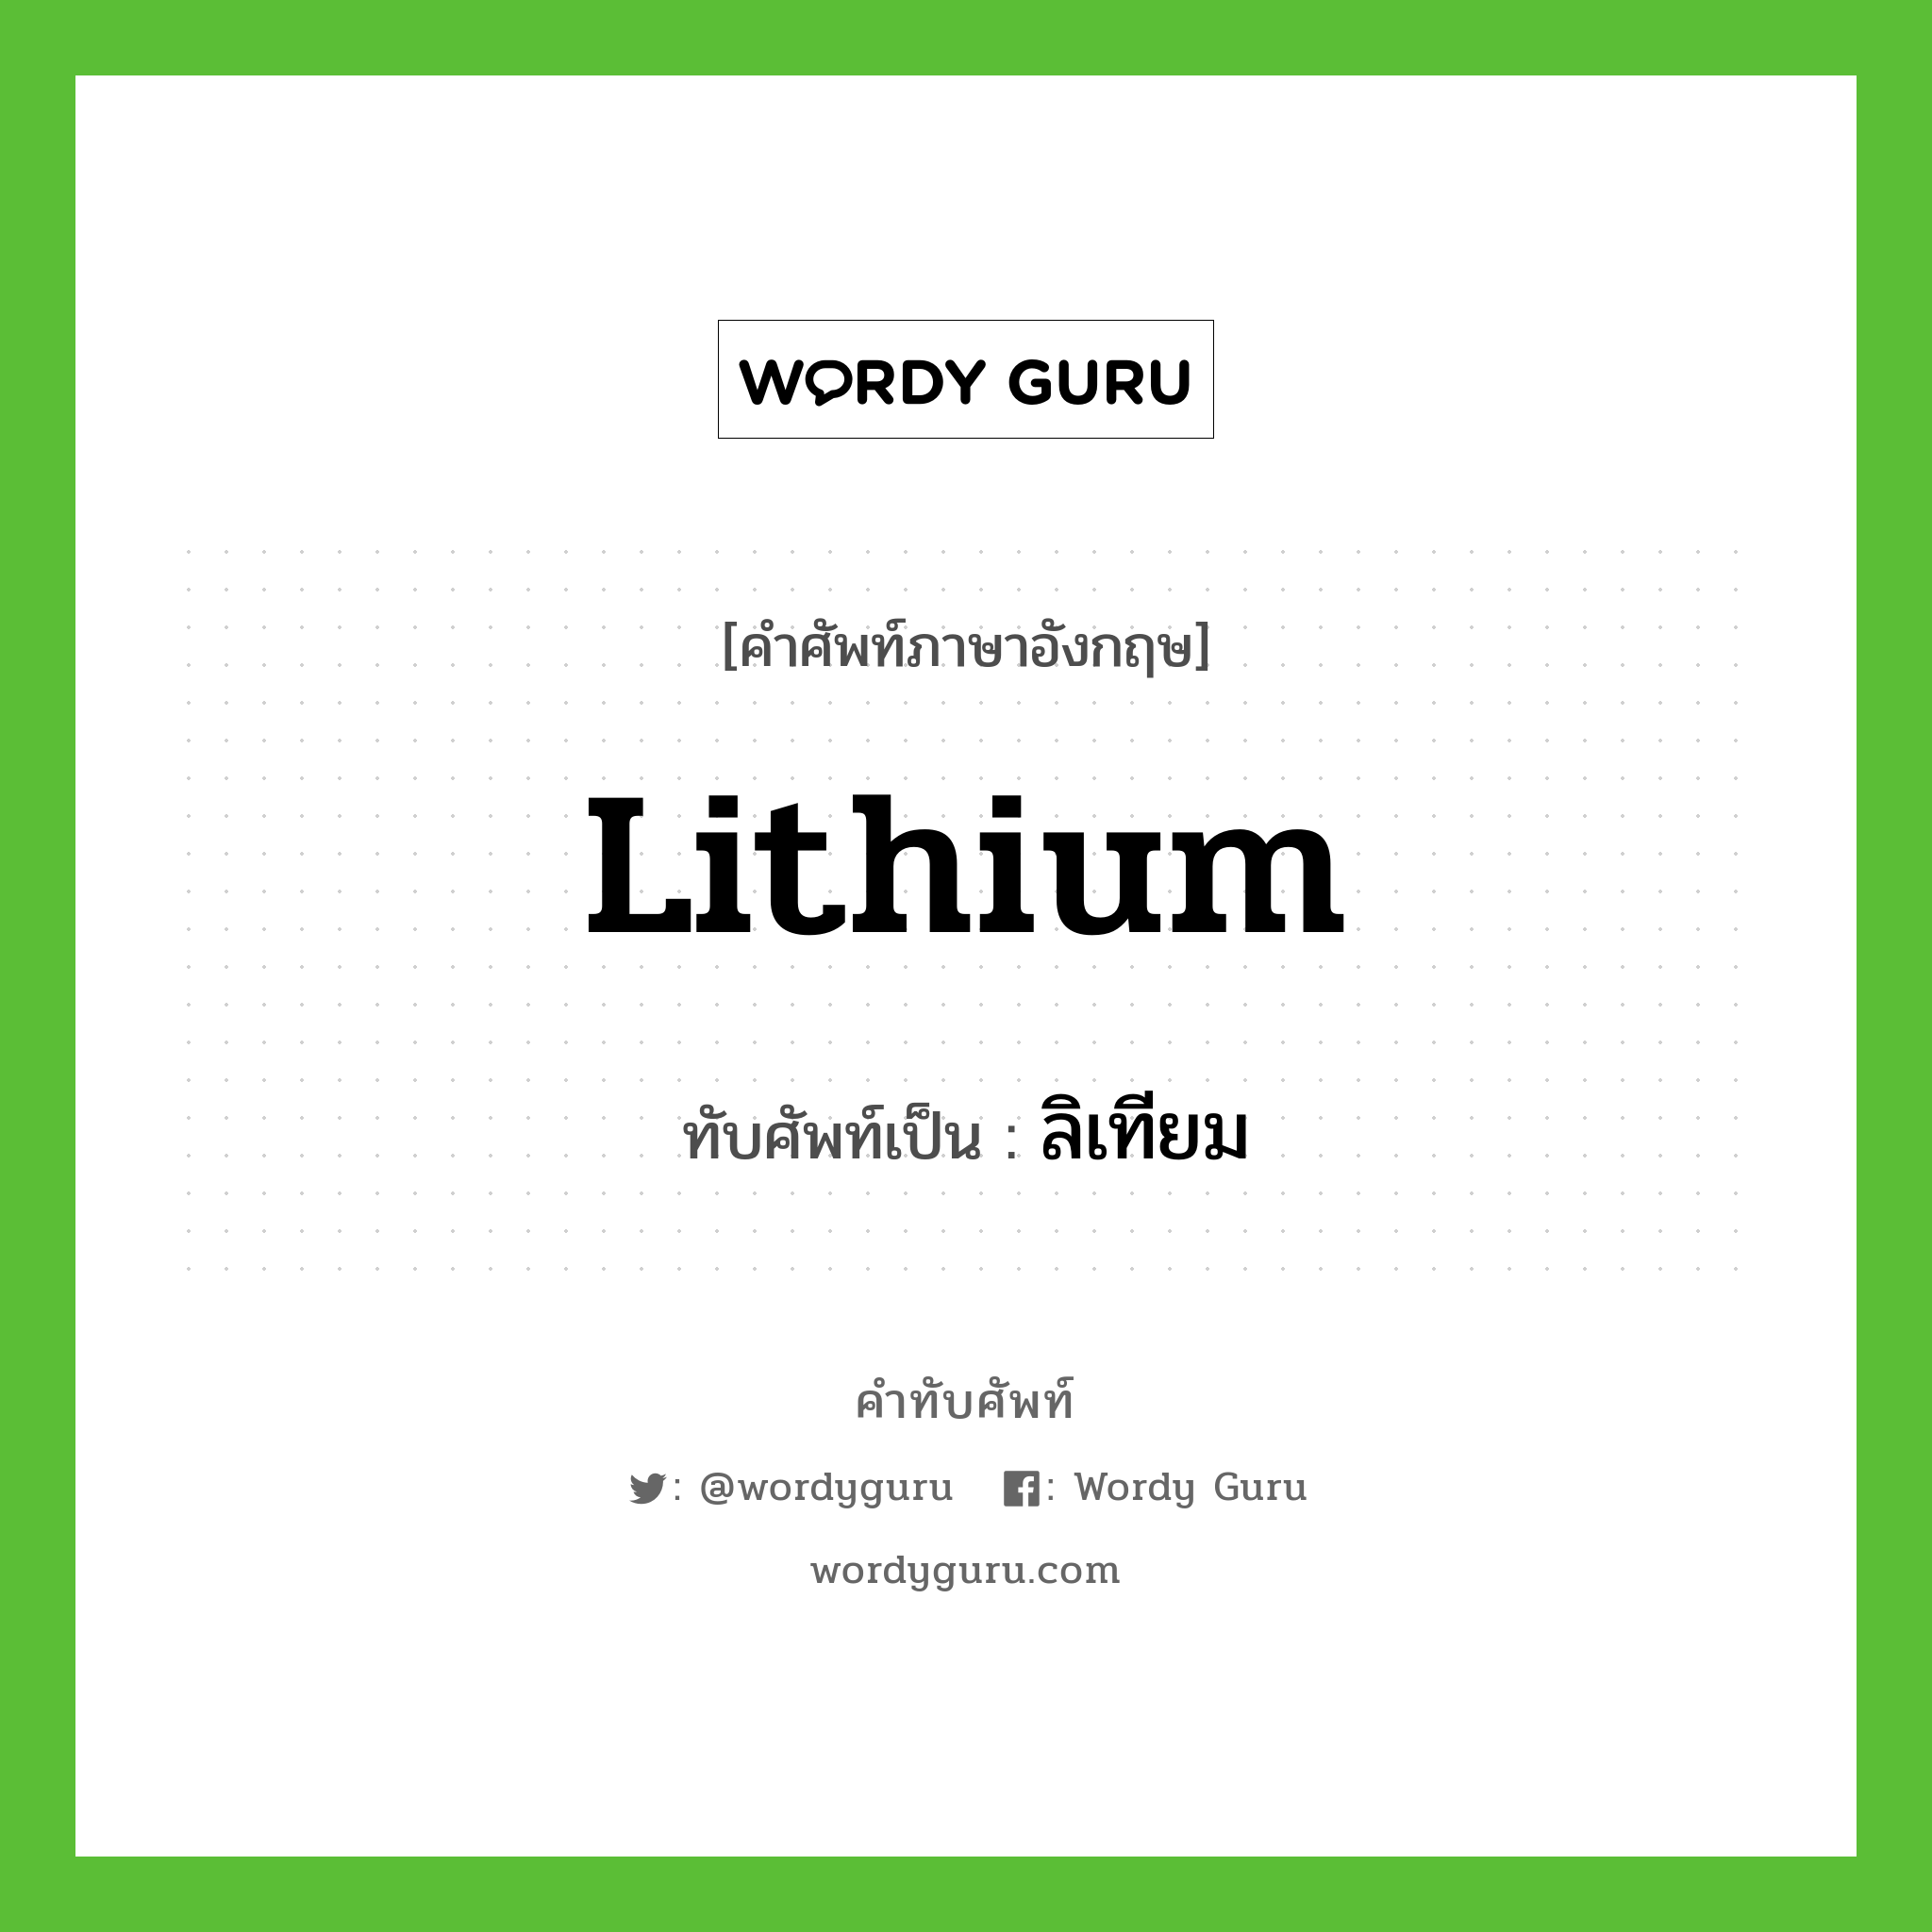 lithium เขียนเป็นคำไทยว่าอะไร?, คำศัพท์ภาษาอังกฤษ lithium ทับศัพท์เป็น ลิเทียม